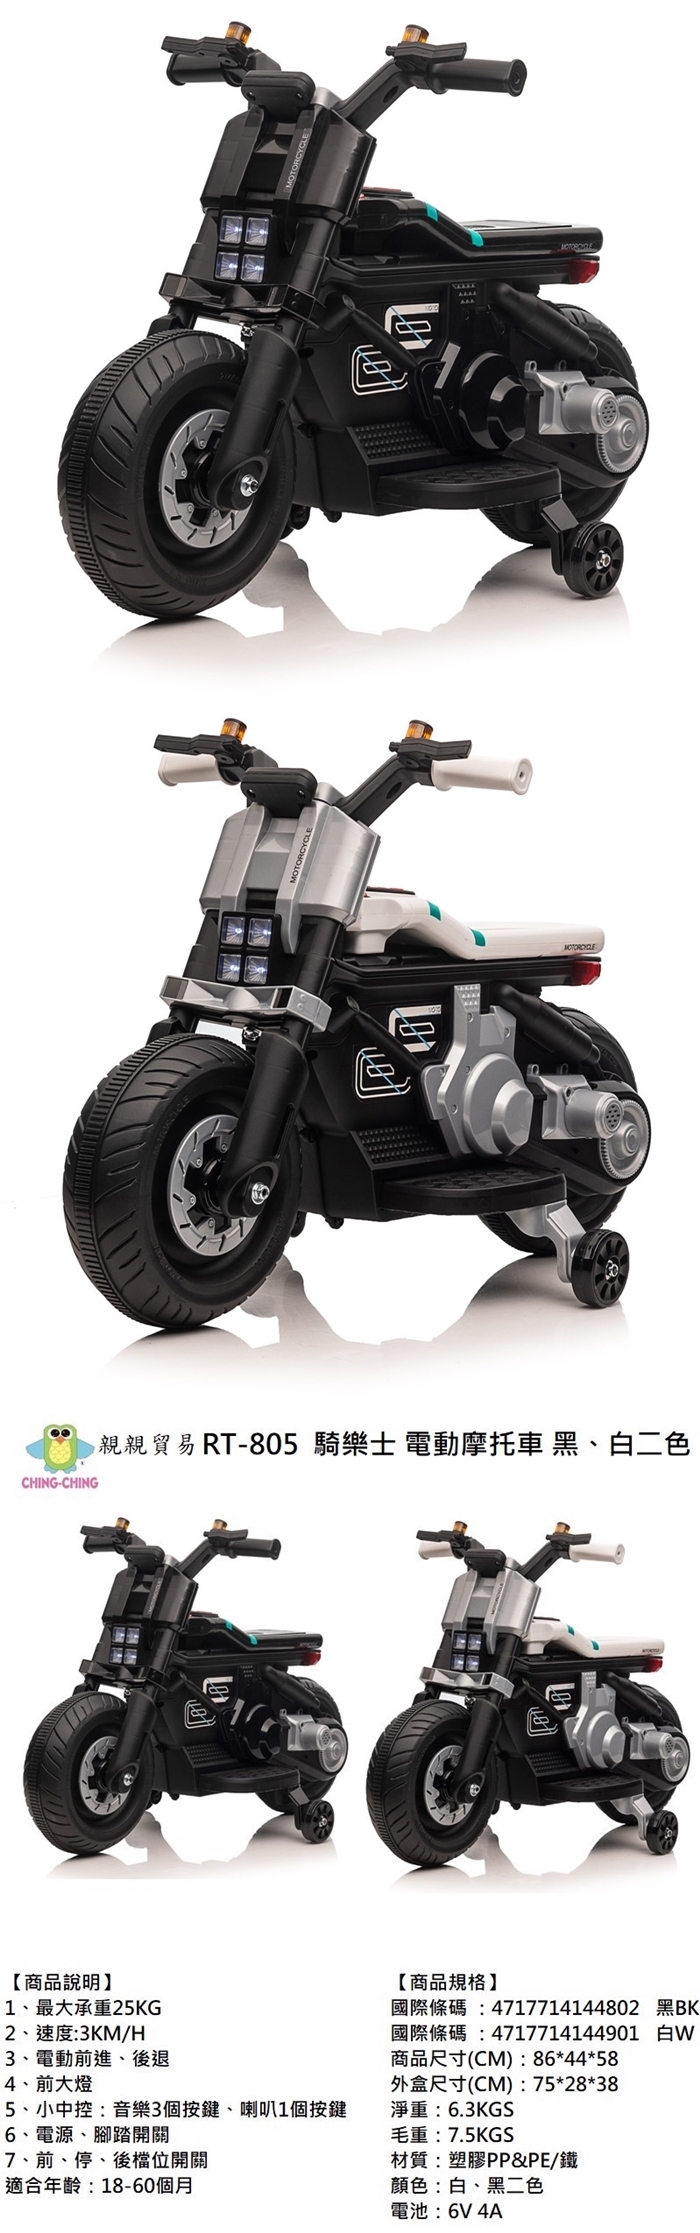 CHING-CHING親親-騎樂士電動摩托車(黑色/白色)RT-805